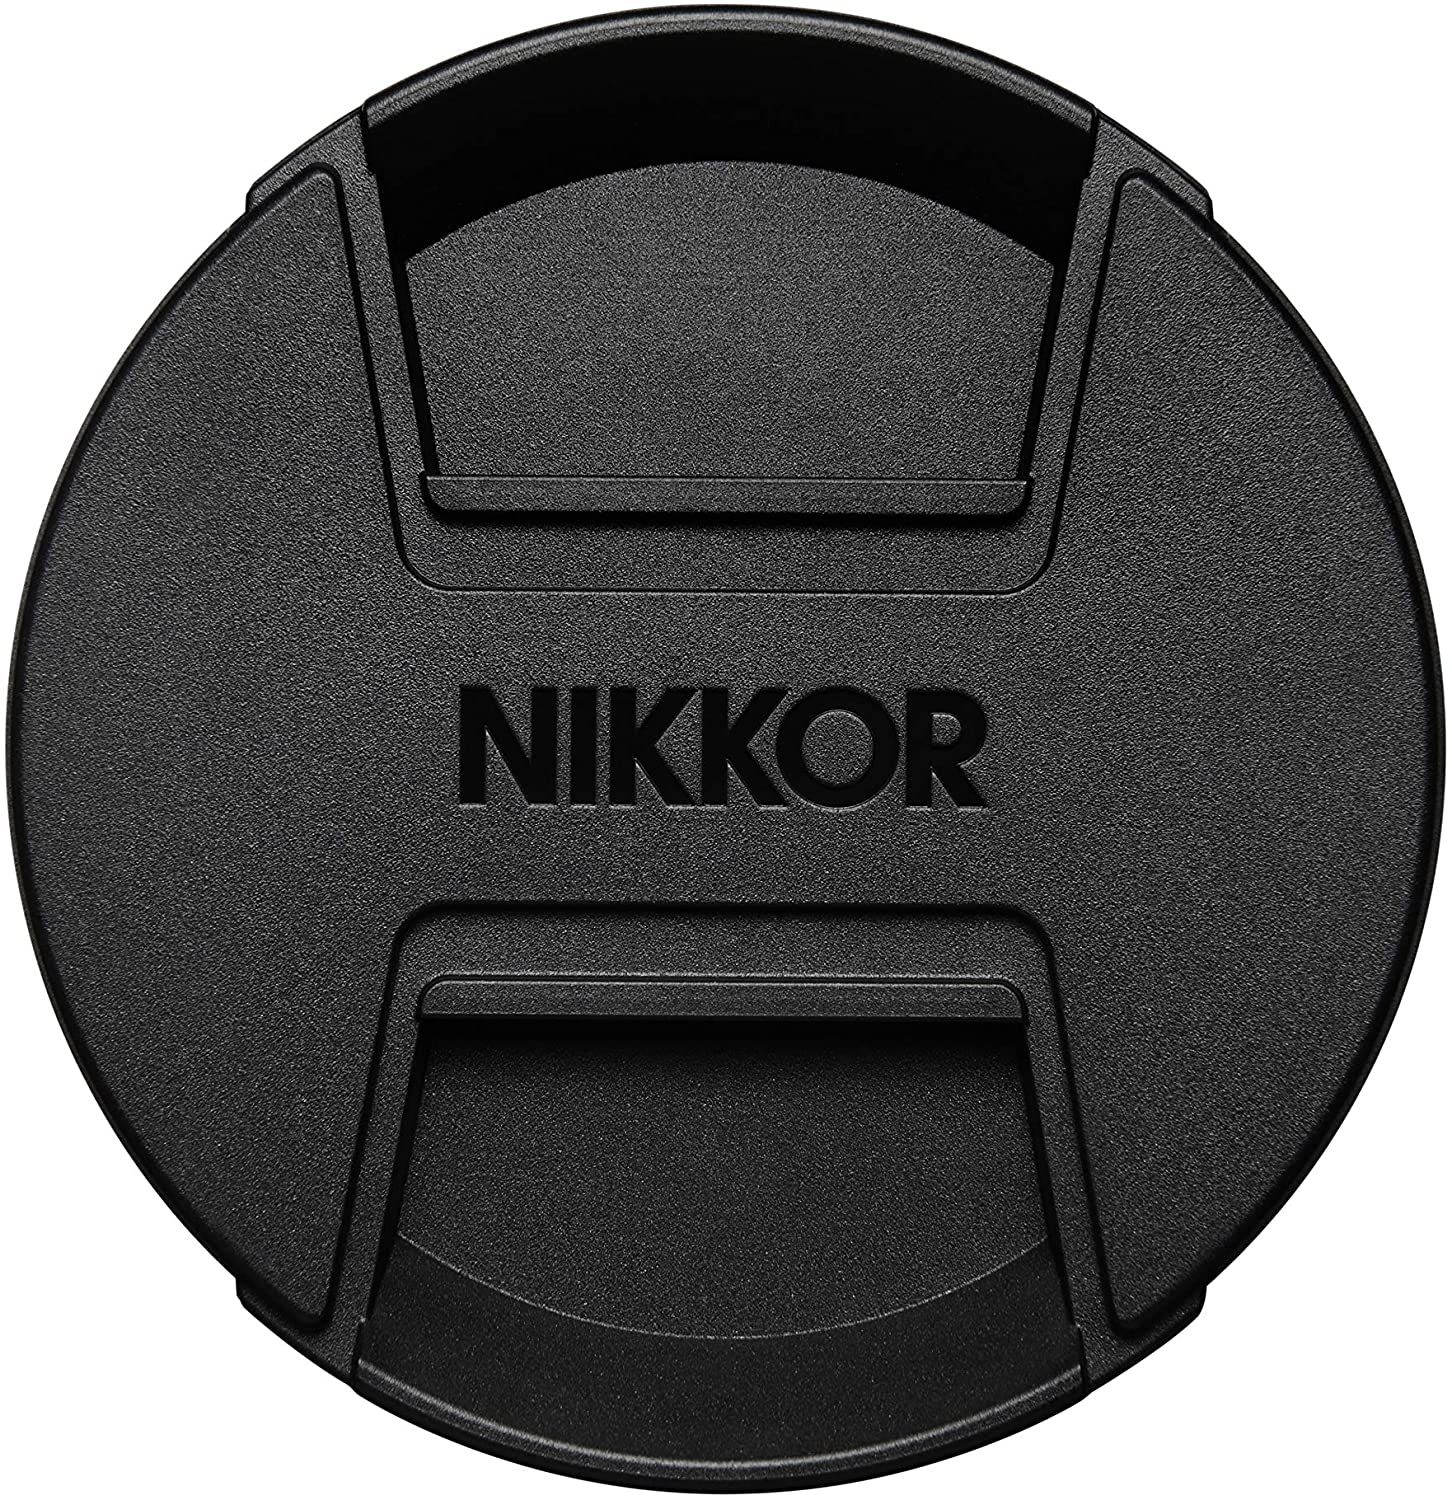 nikon lens filters review